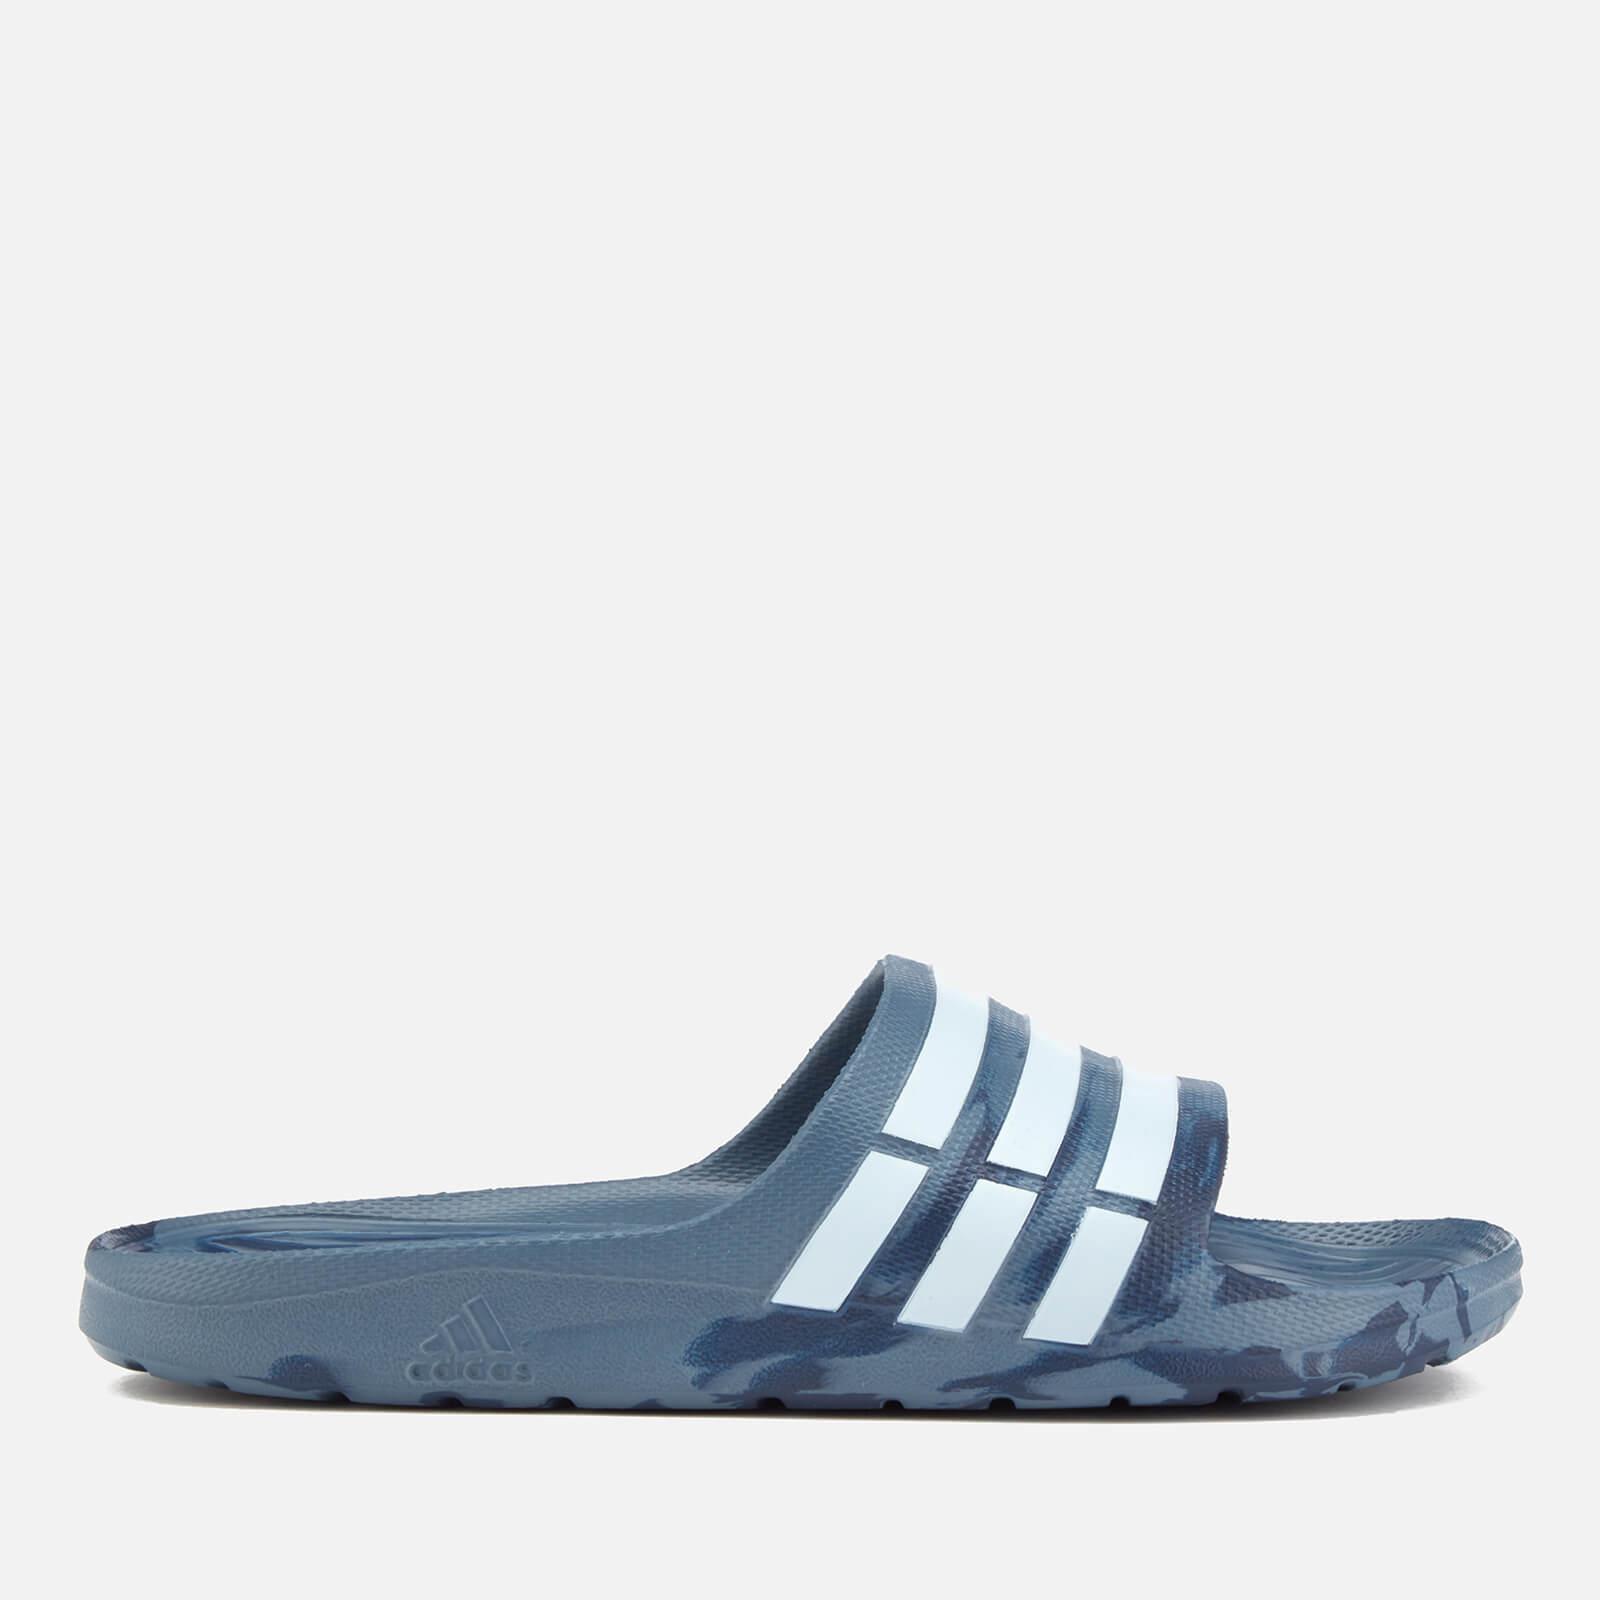 adidas Duramo Slide Sandals in for